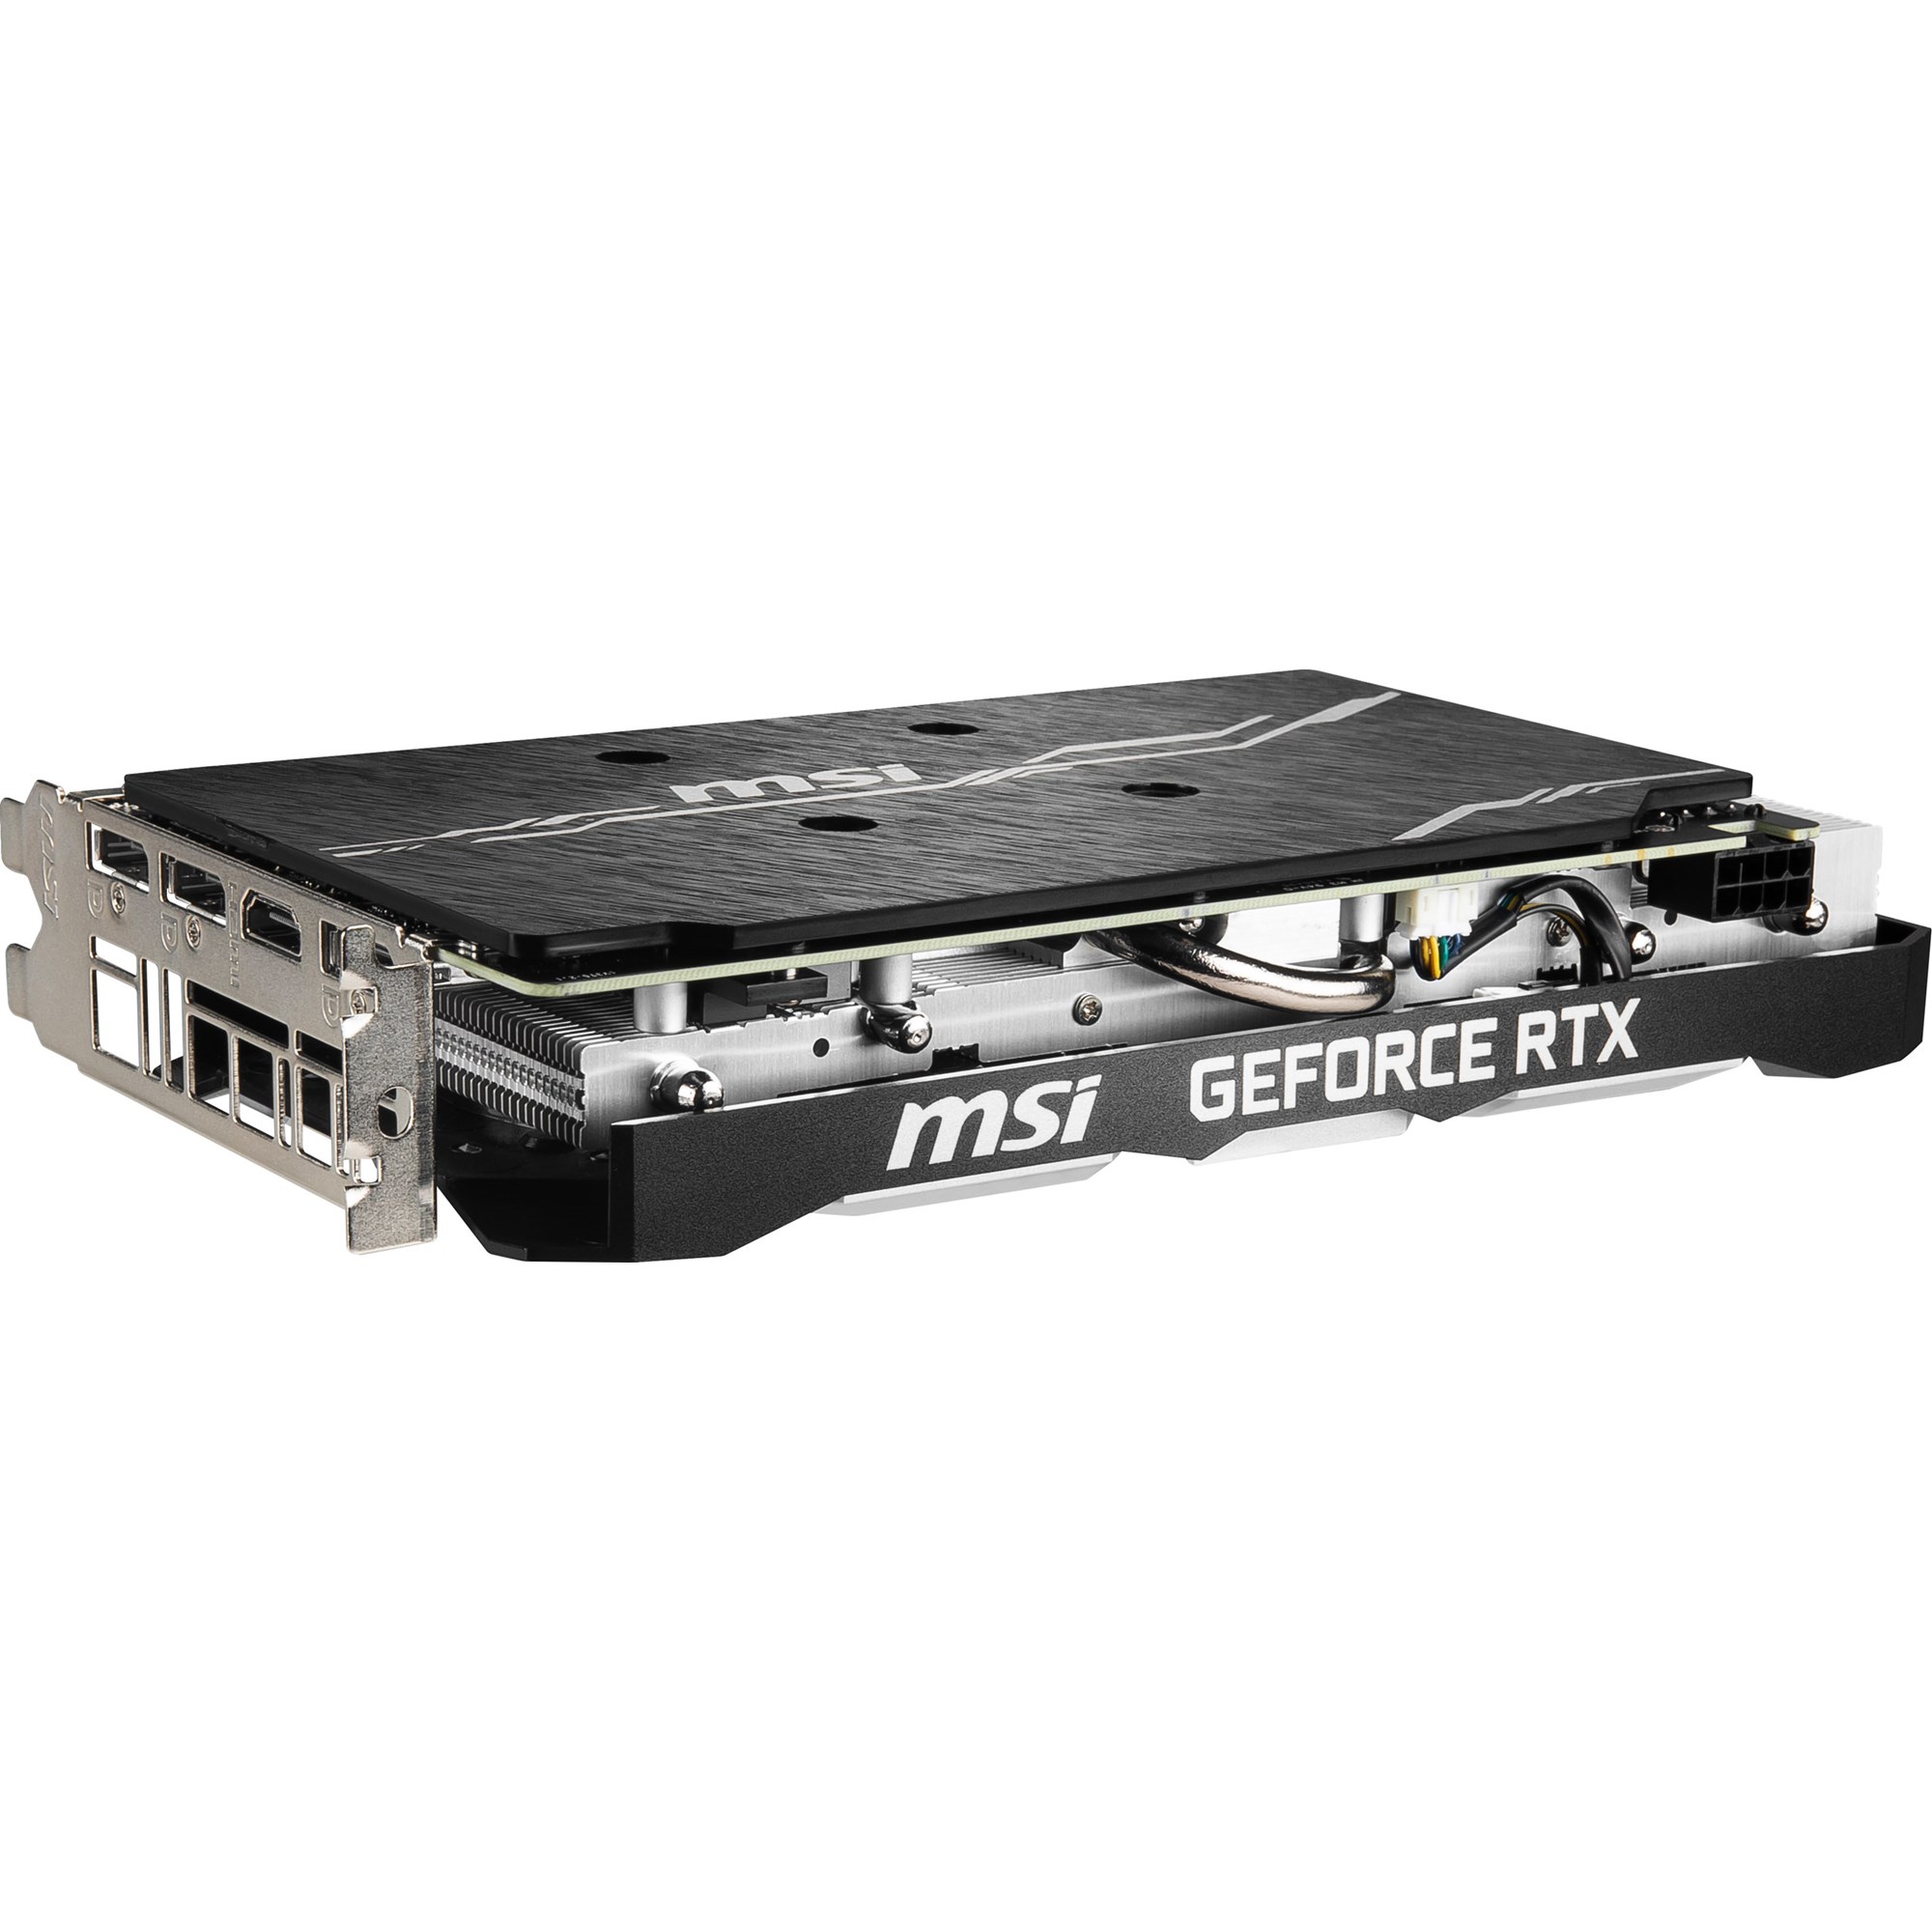 MSI GeForce RTX 2070 Ventus GP 8GB GPU 